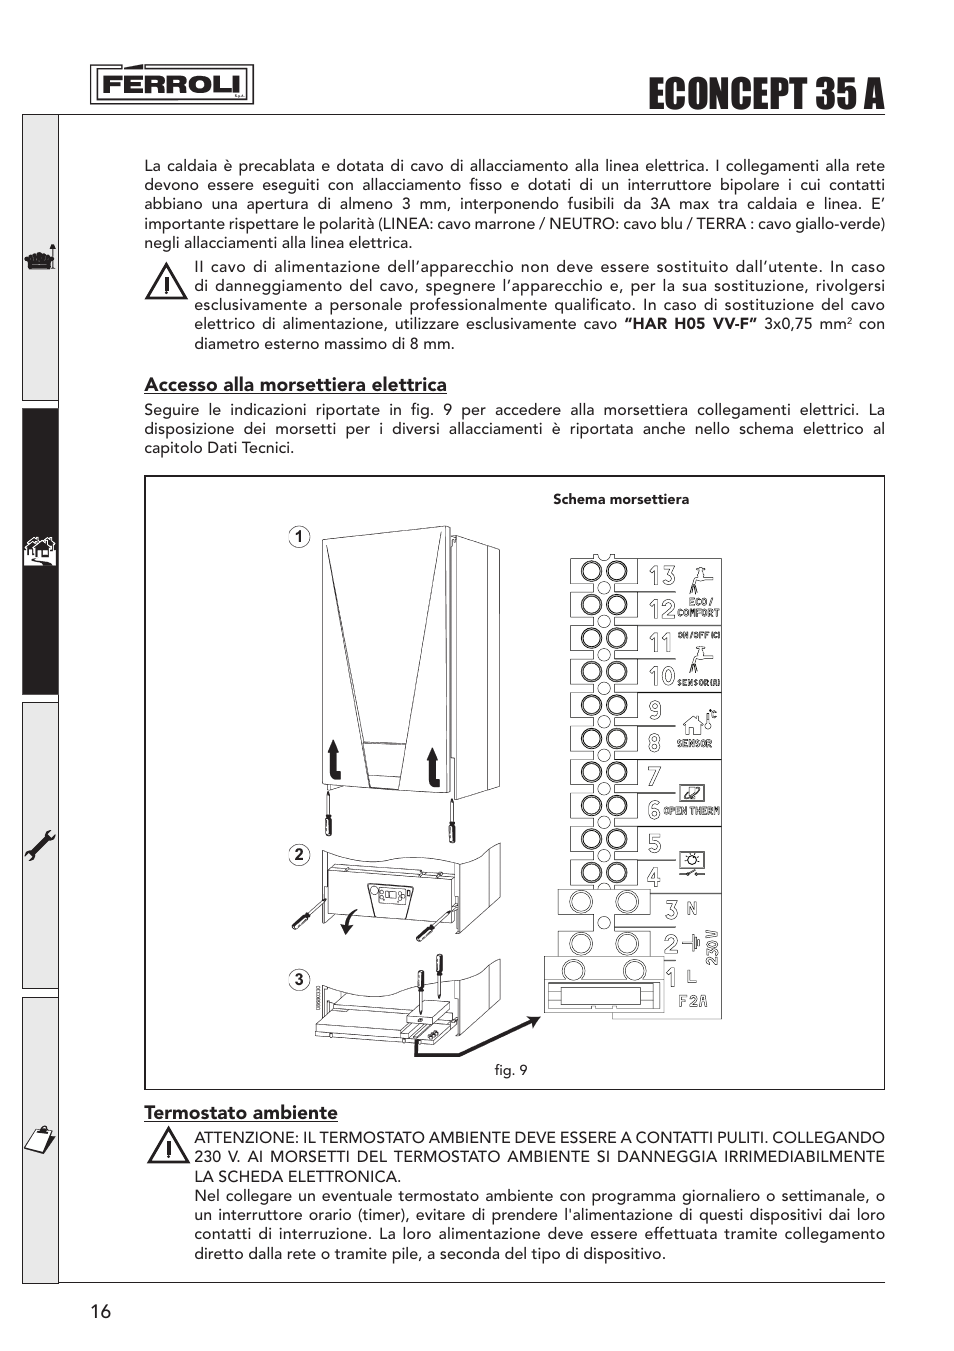 Econcept 35 a | FERROLI Econcept 35A Manuale d'uso | Pagina 16 / 36